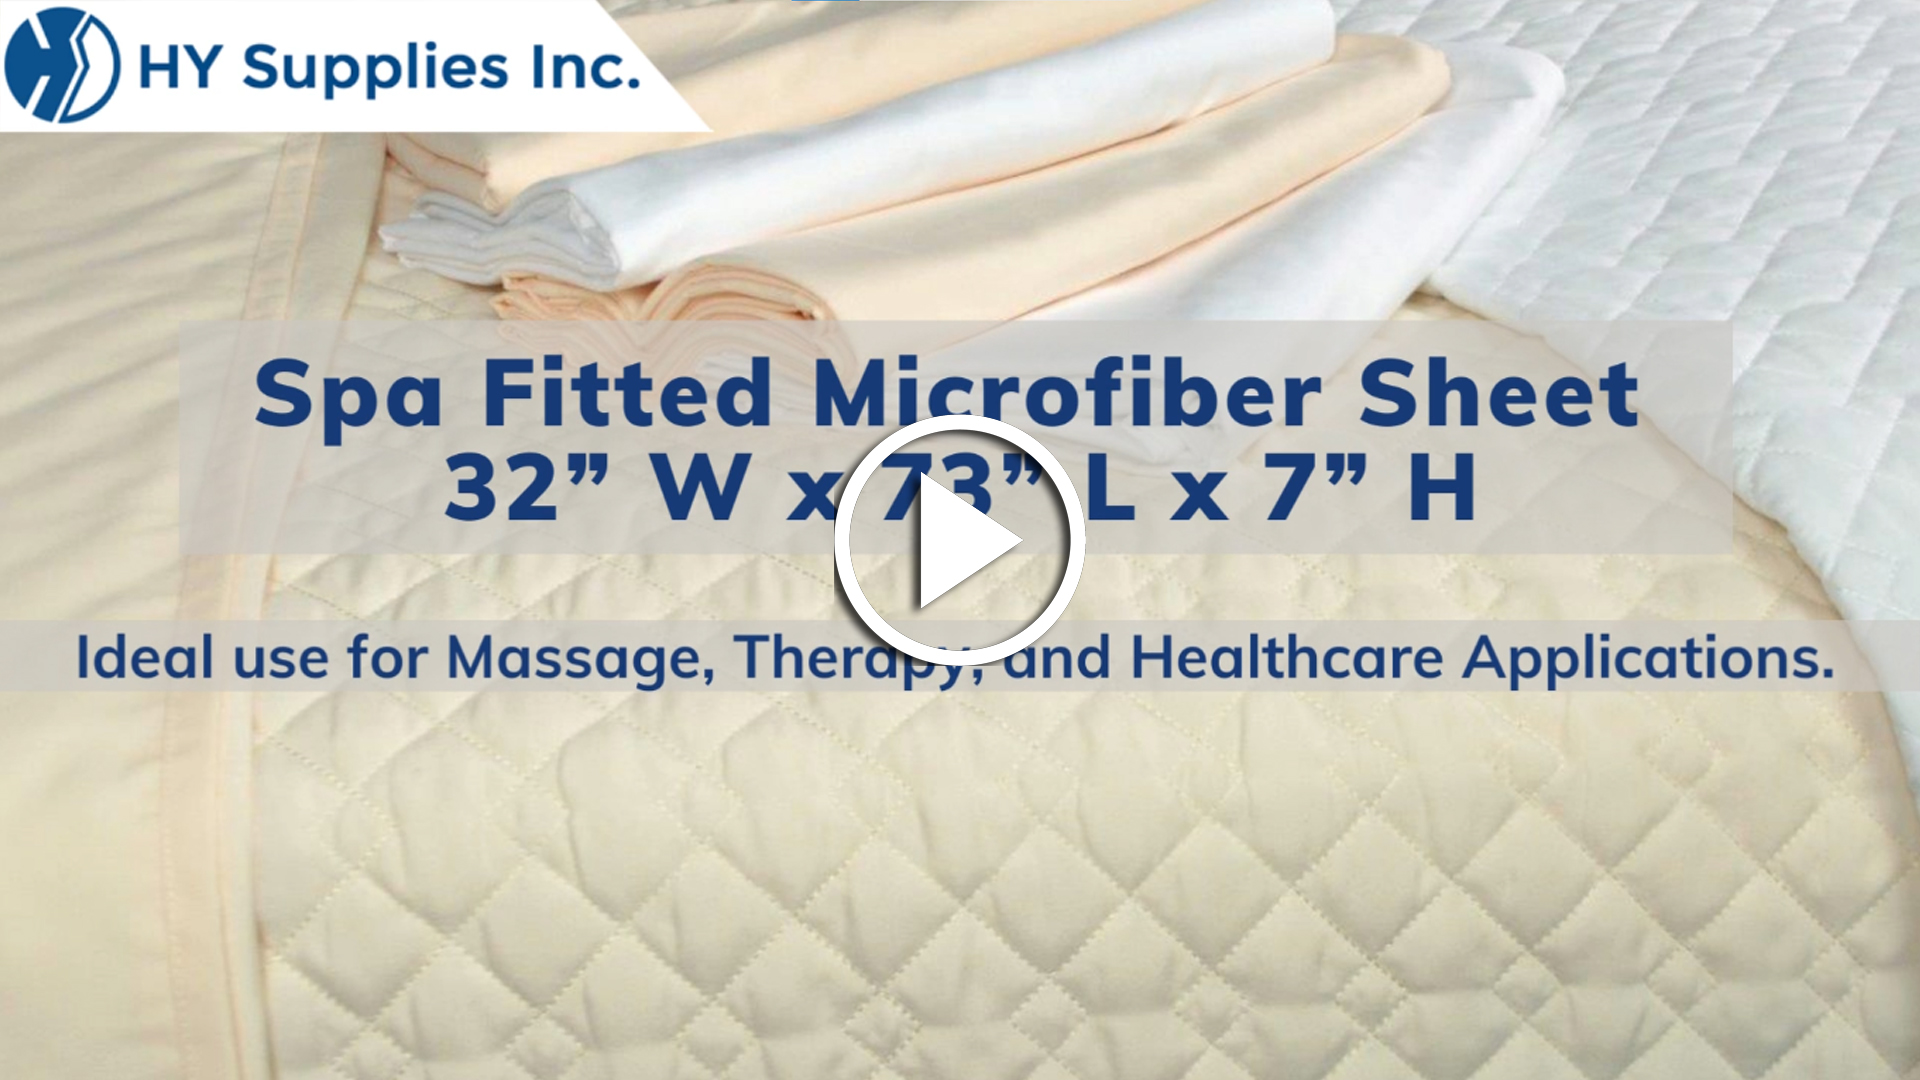 Spa Fitted Microfiber Sheet - 32” W x 73” L x 7” H